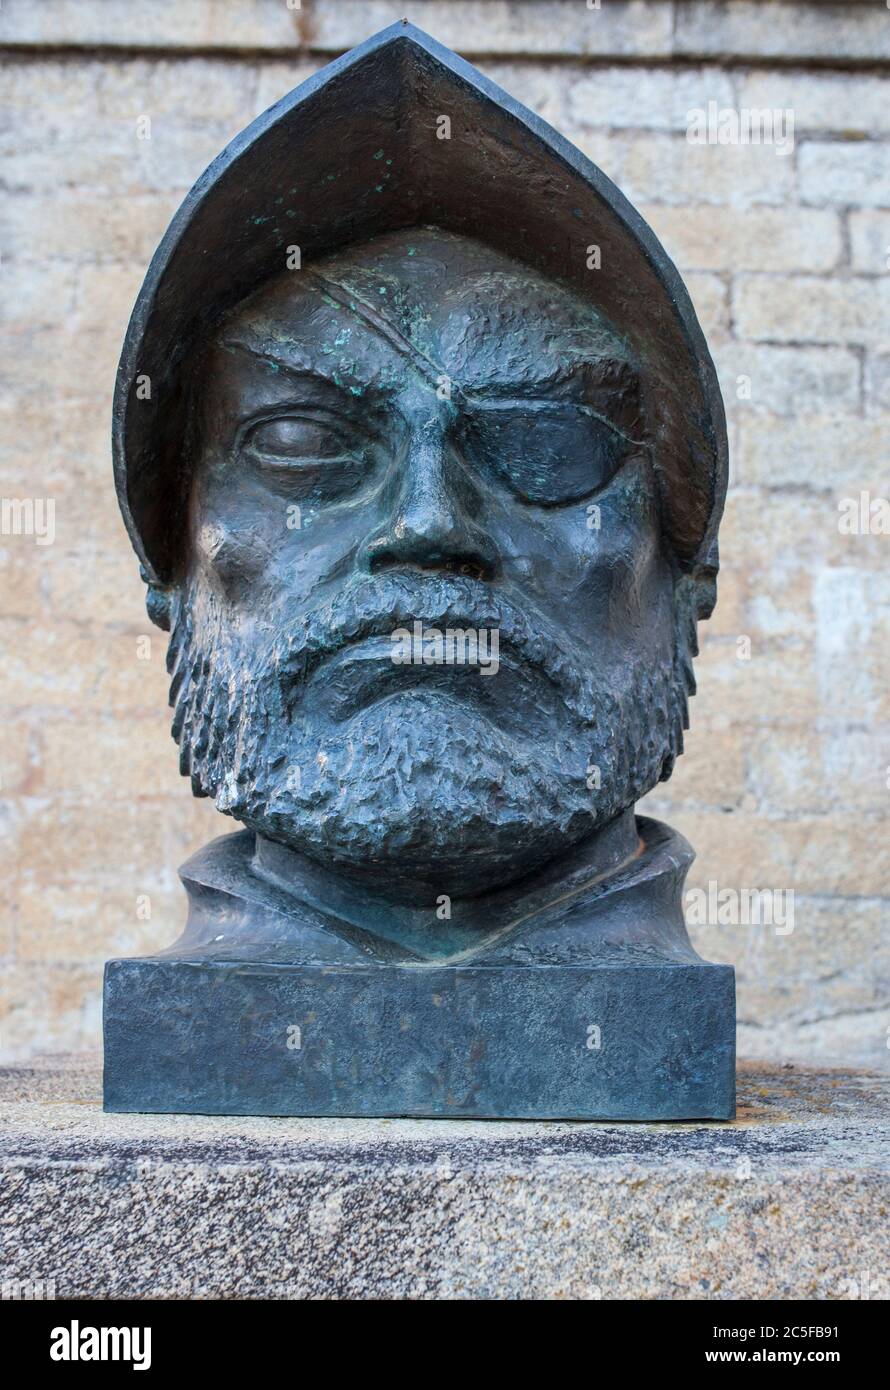 Trujillo, Spain - June 28th, 2020: Francisco de Orellana bust. Spanish explorer and conquistador. Trujillo, Spain. Unknown artist Stock Photo